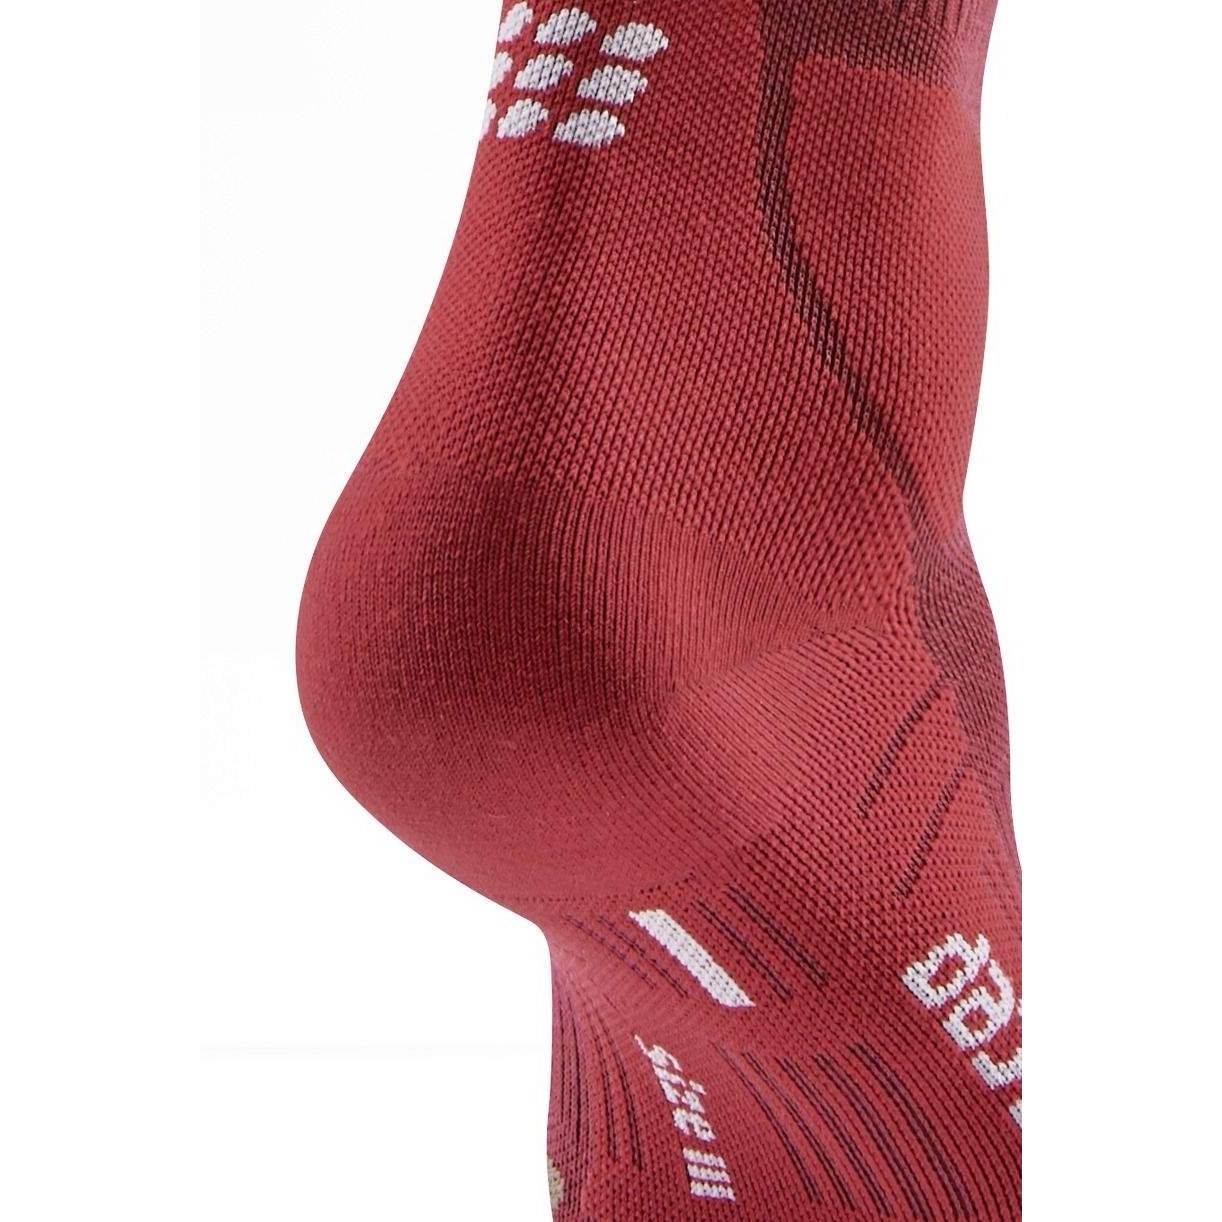 80's Mid Cut Compression Socks for Men